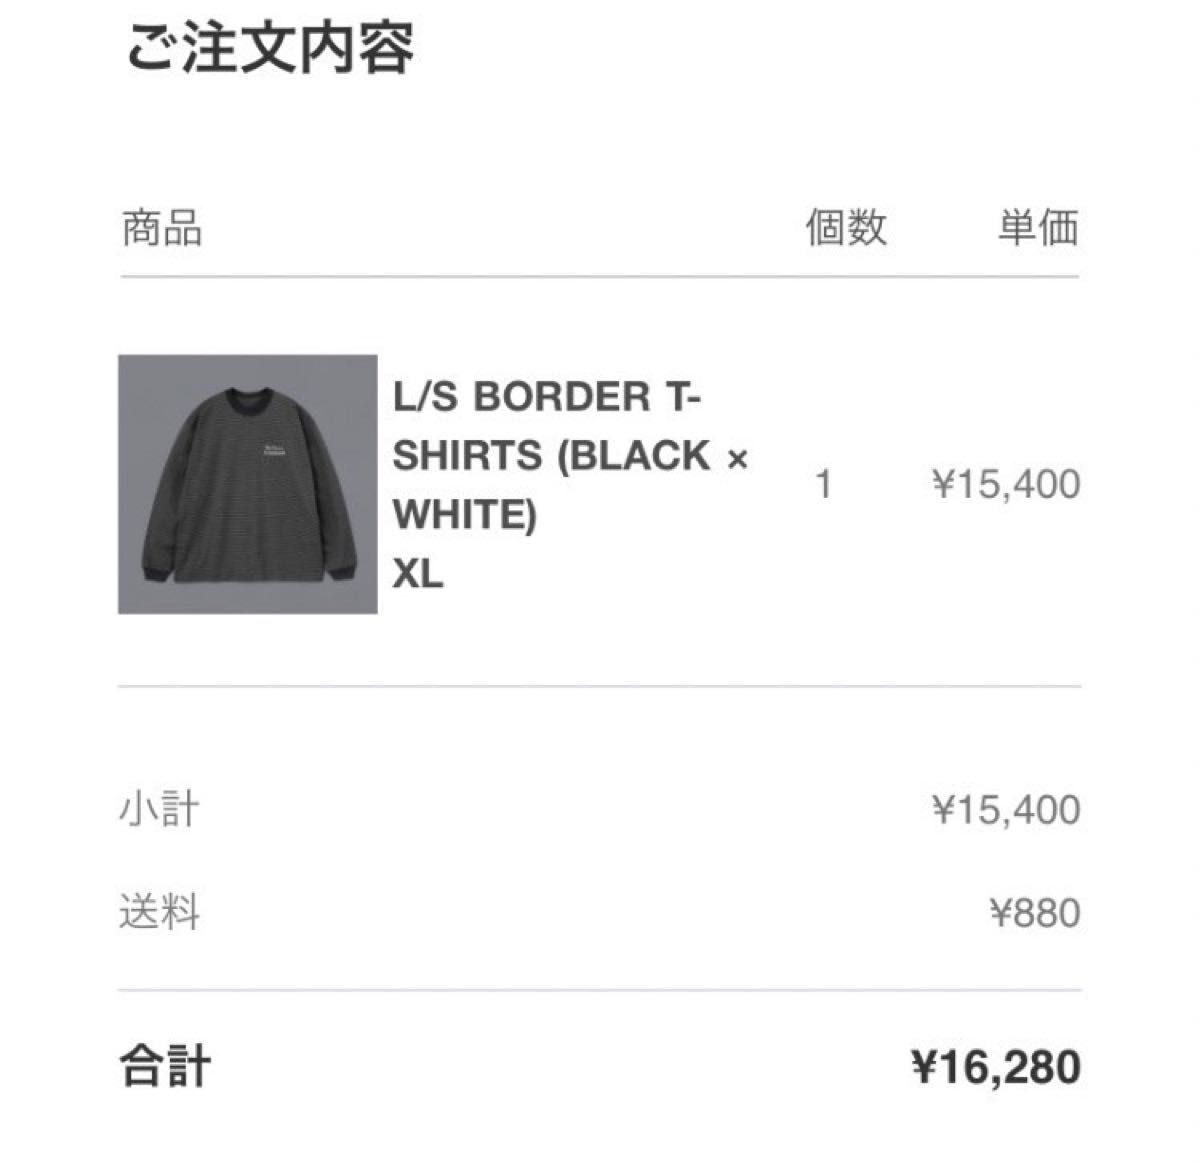 ennoy L/S BORDER T-SHIRTS black white XLサイズ｜PayPayフリマ